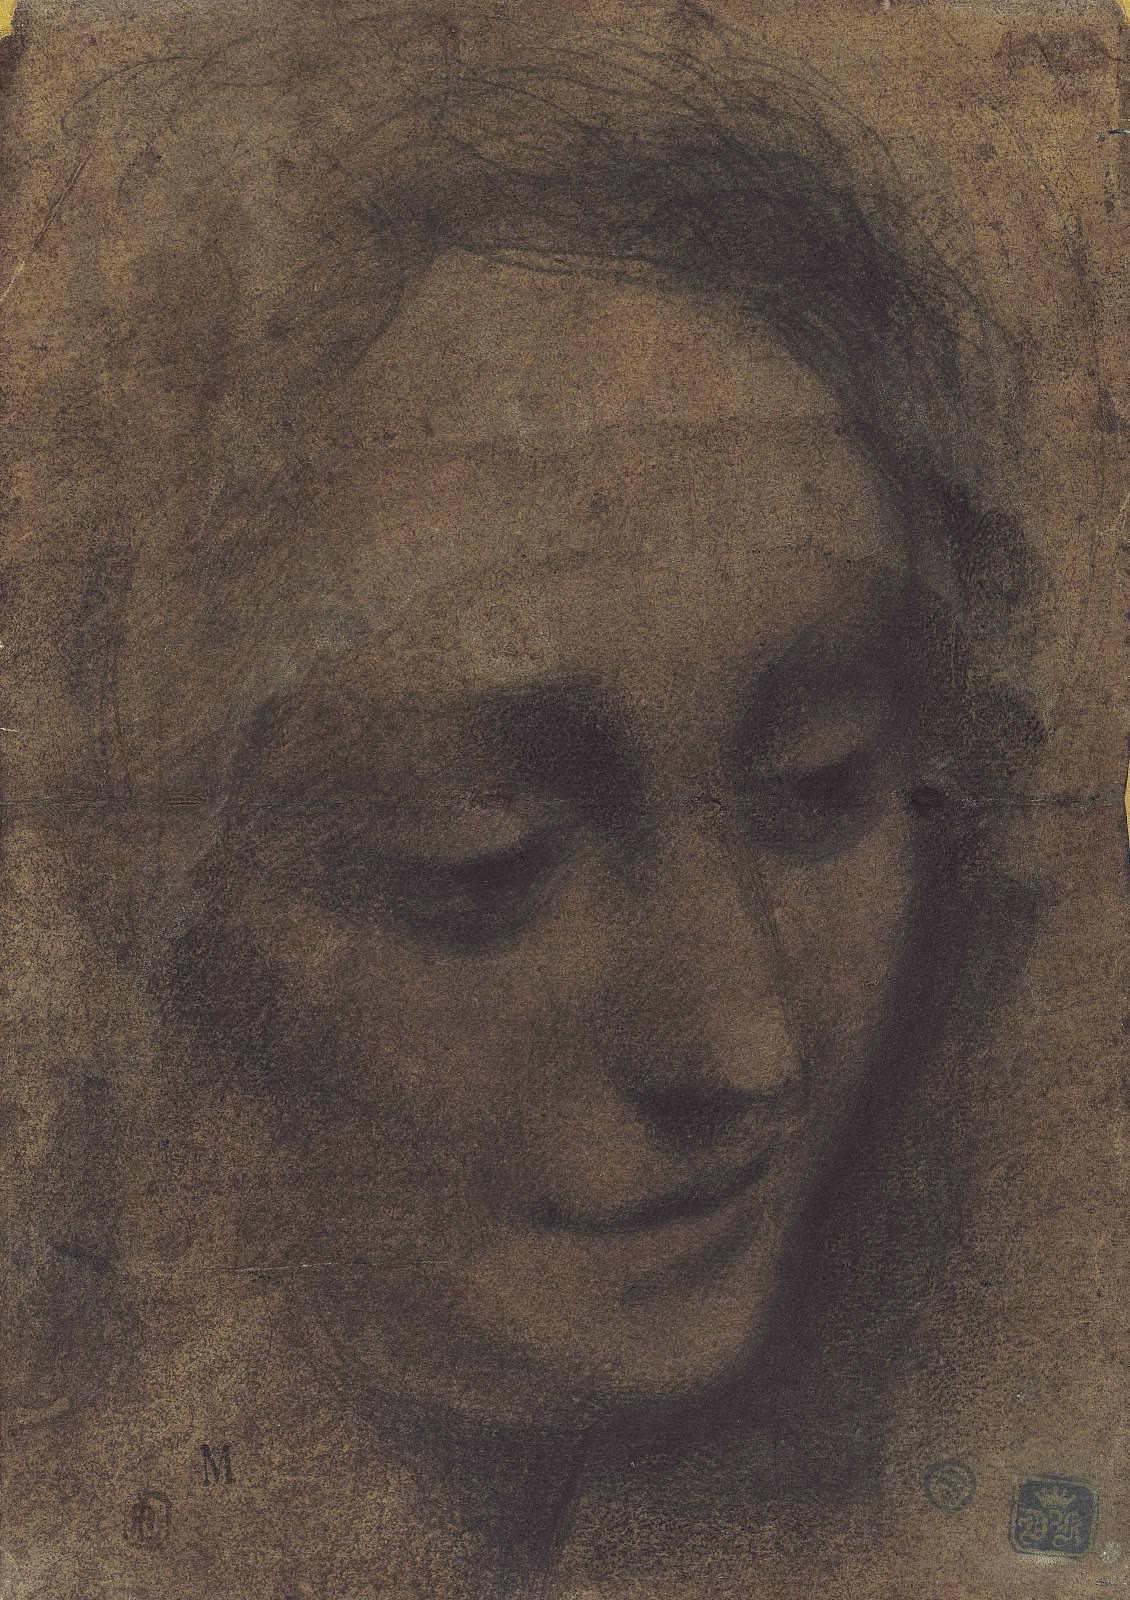 Bernardino+Luini-1482-1532 (7).jpg